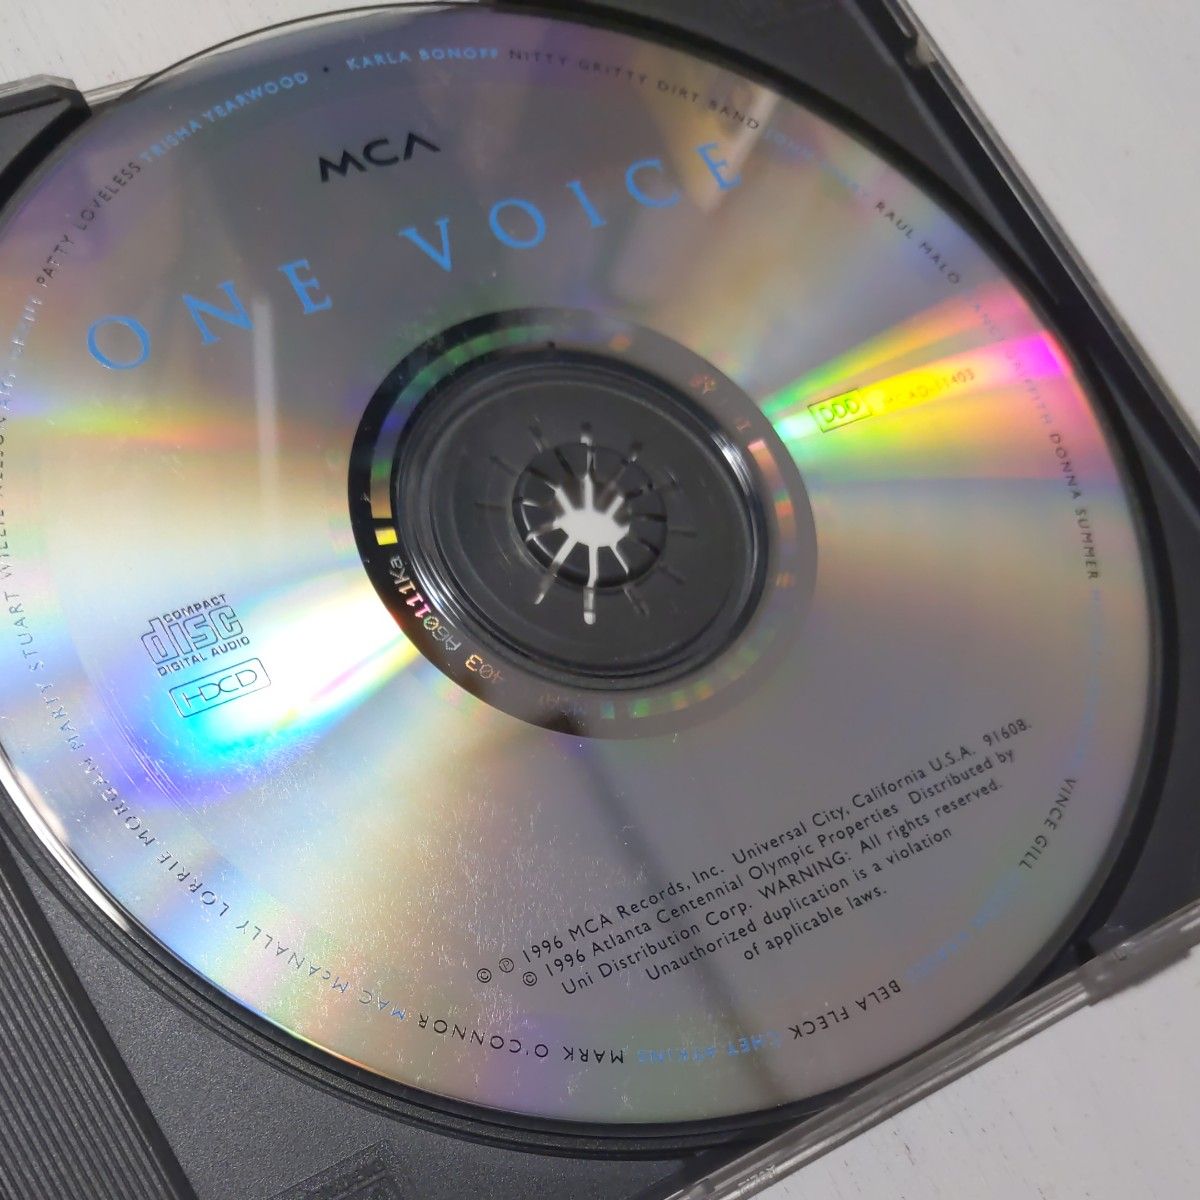 ONE VOICE ATLANTA OLYMPIC ALBUM KARLA BONOFF オムニバス CD